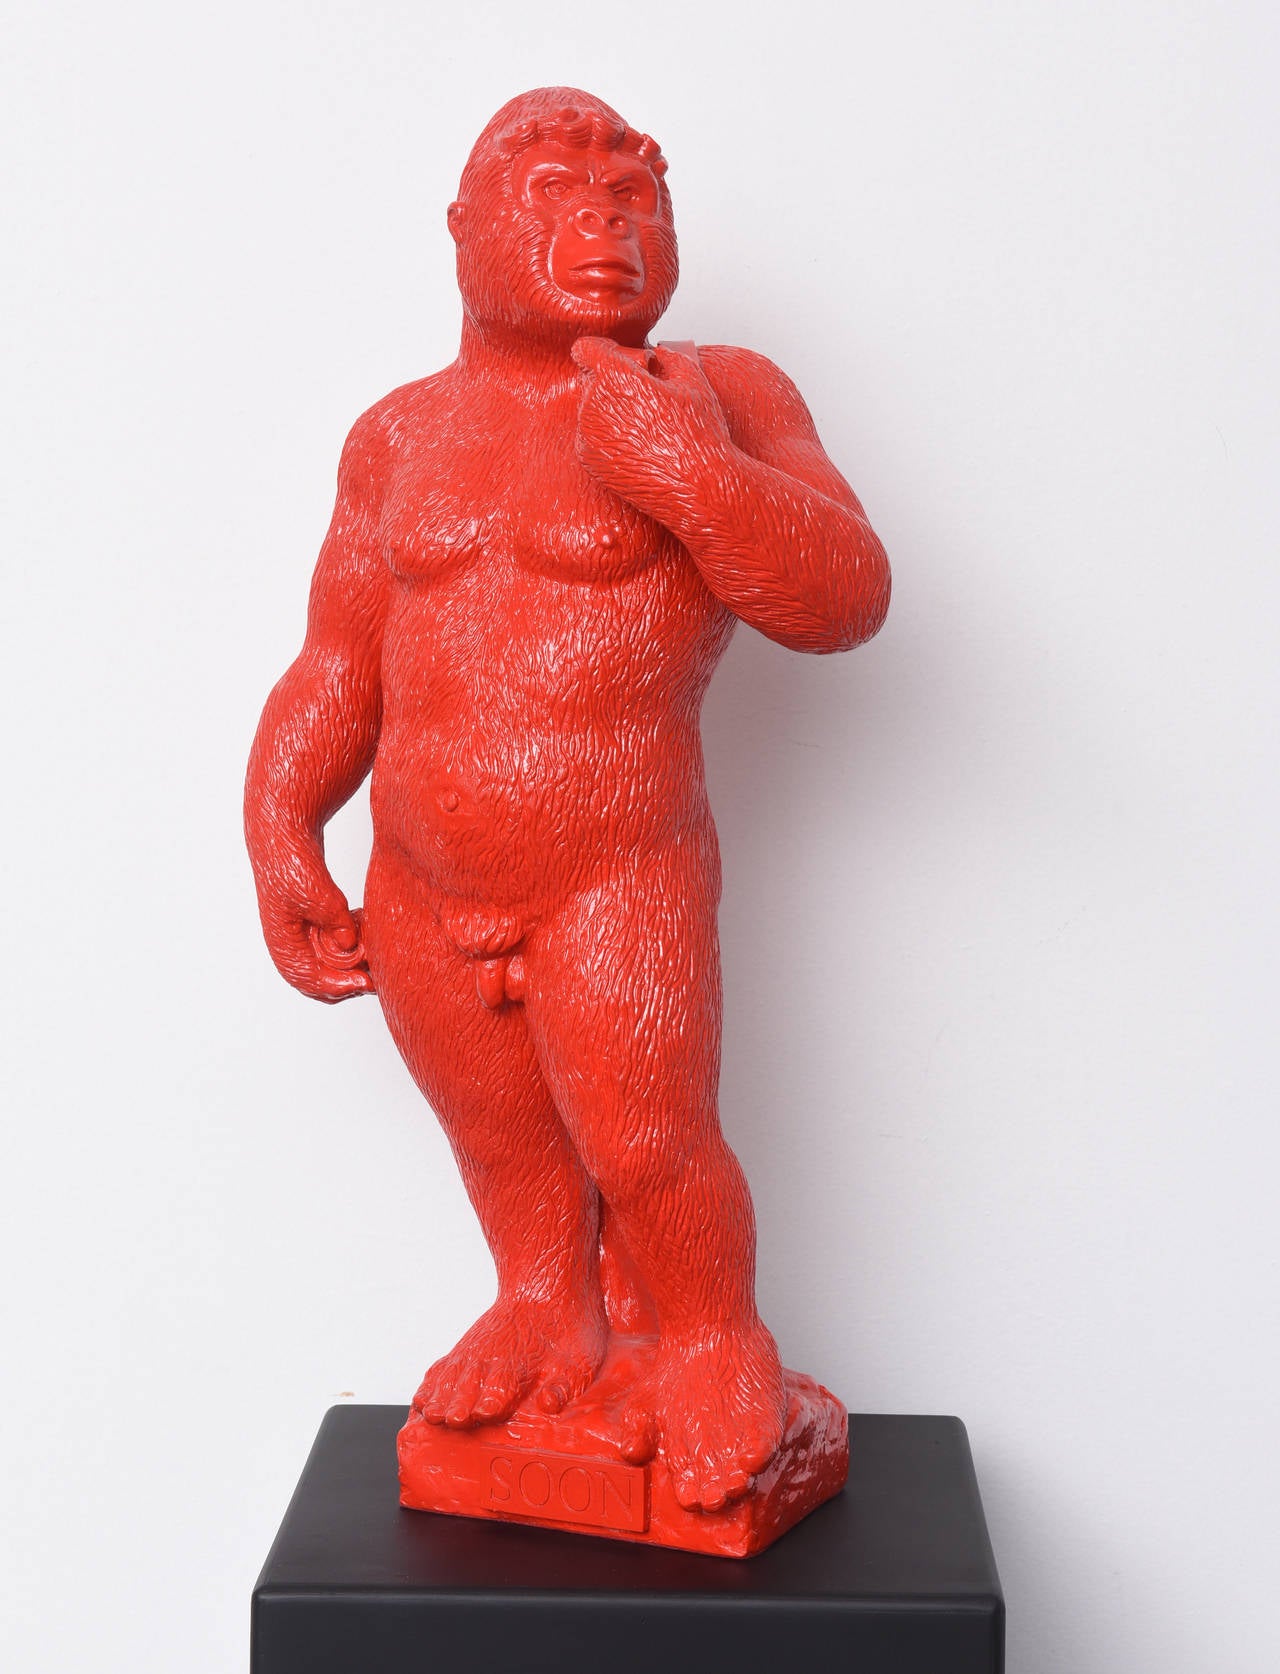 Patrick Schumacher Nude Sculpture - Soon - Red resin sculpture